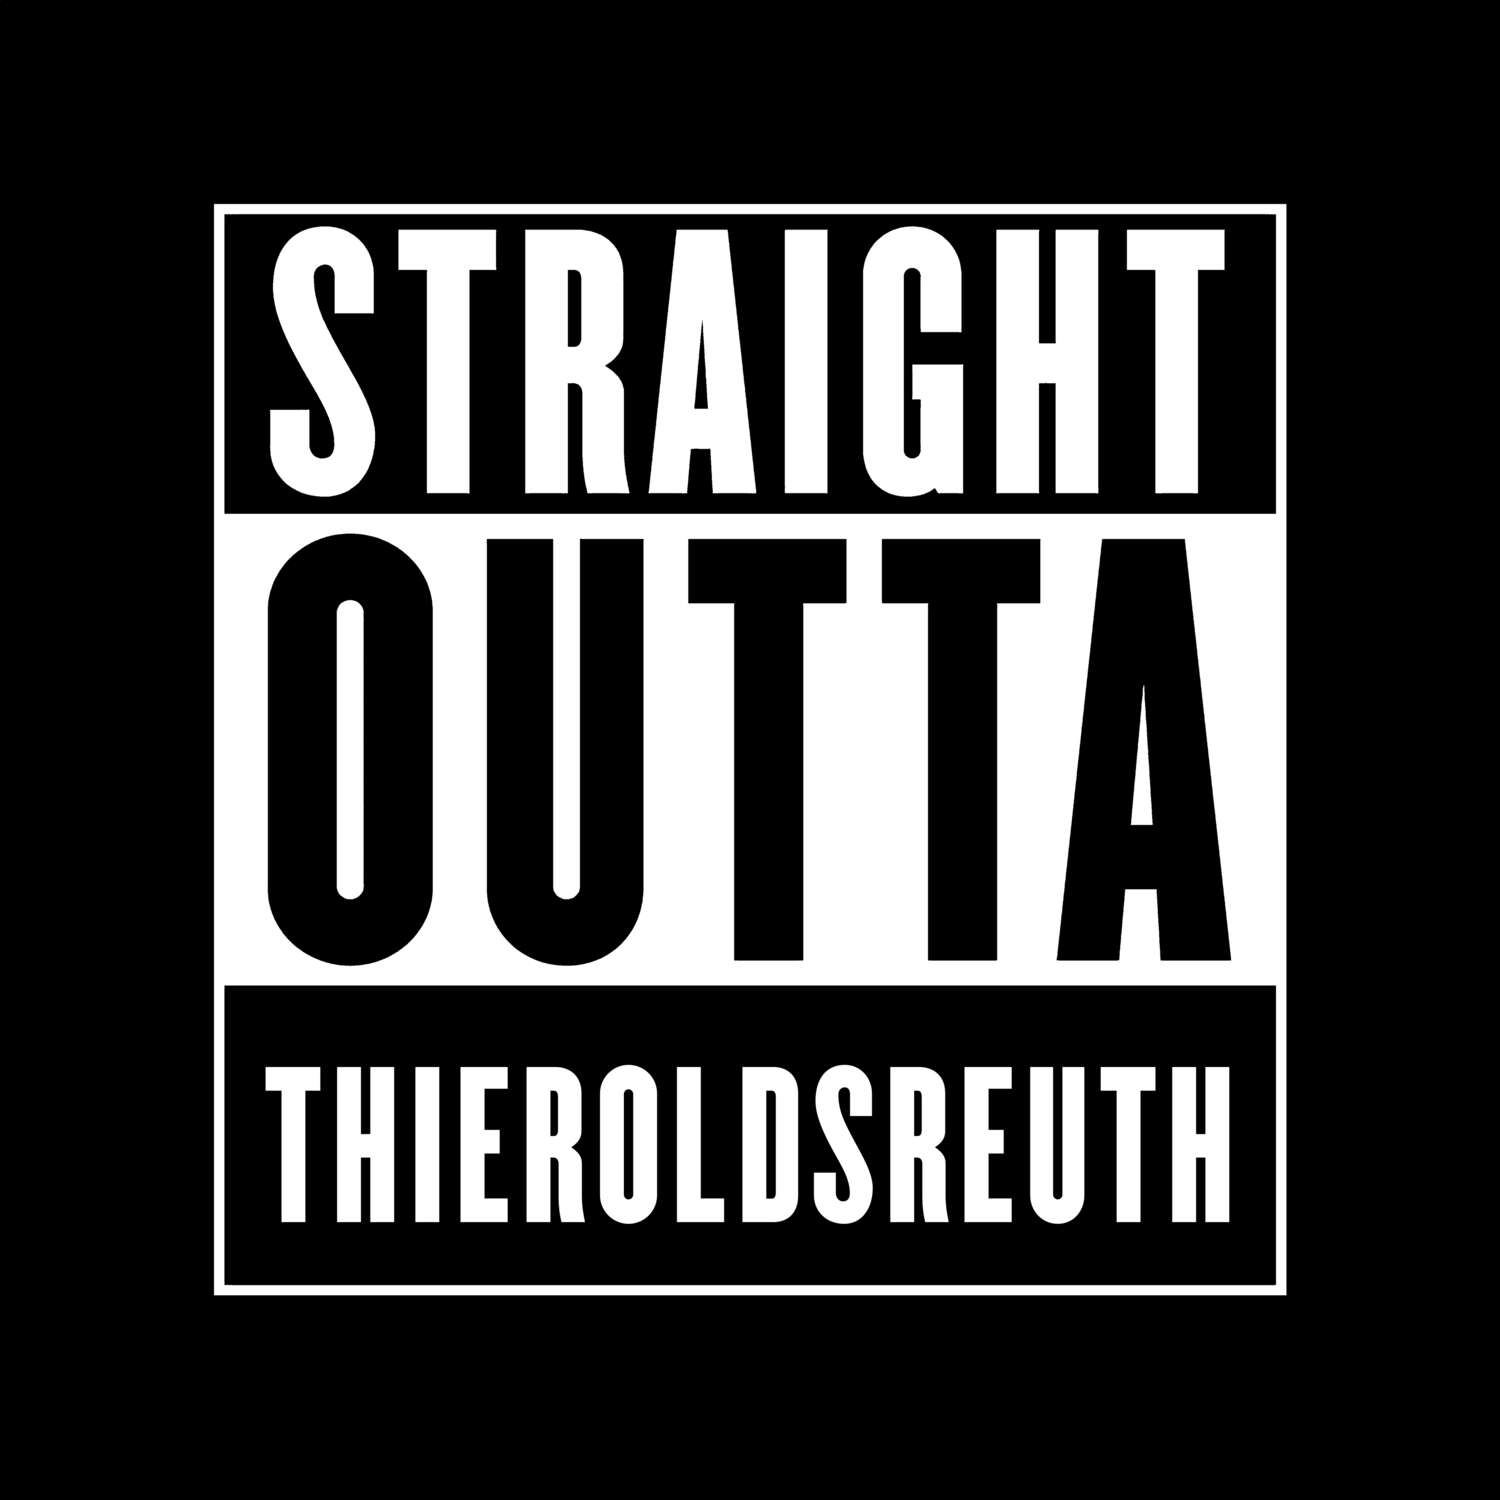 Thieroldsreuth T-Shirt »Straight Outta«